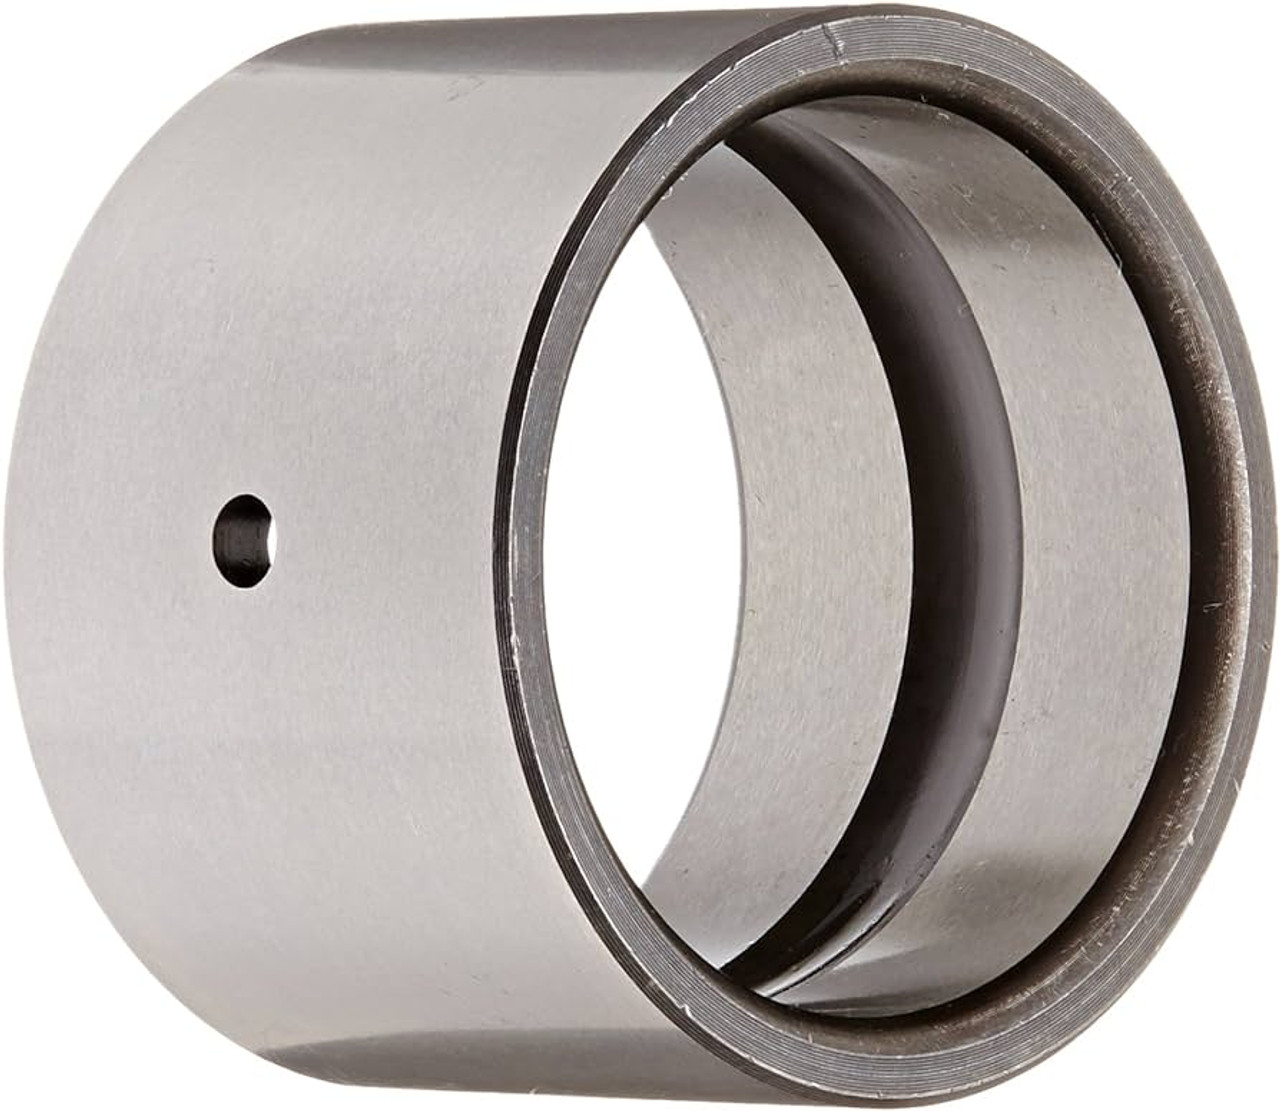 1 x 1-1/4 x 25.65mm Needle Bearing Inner Ring   LRB 162016